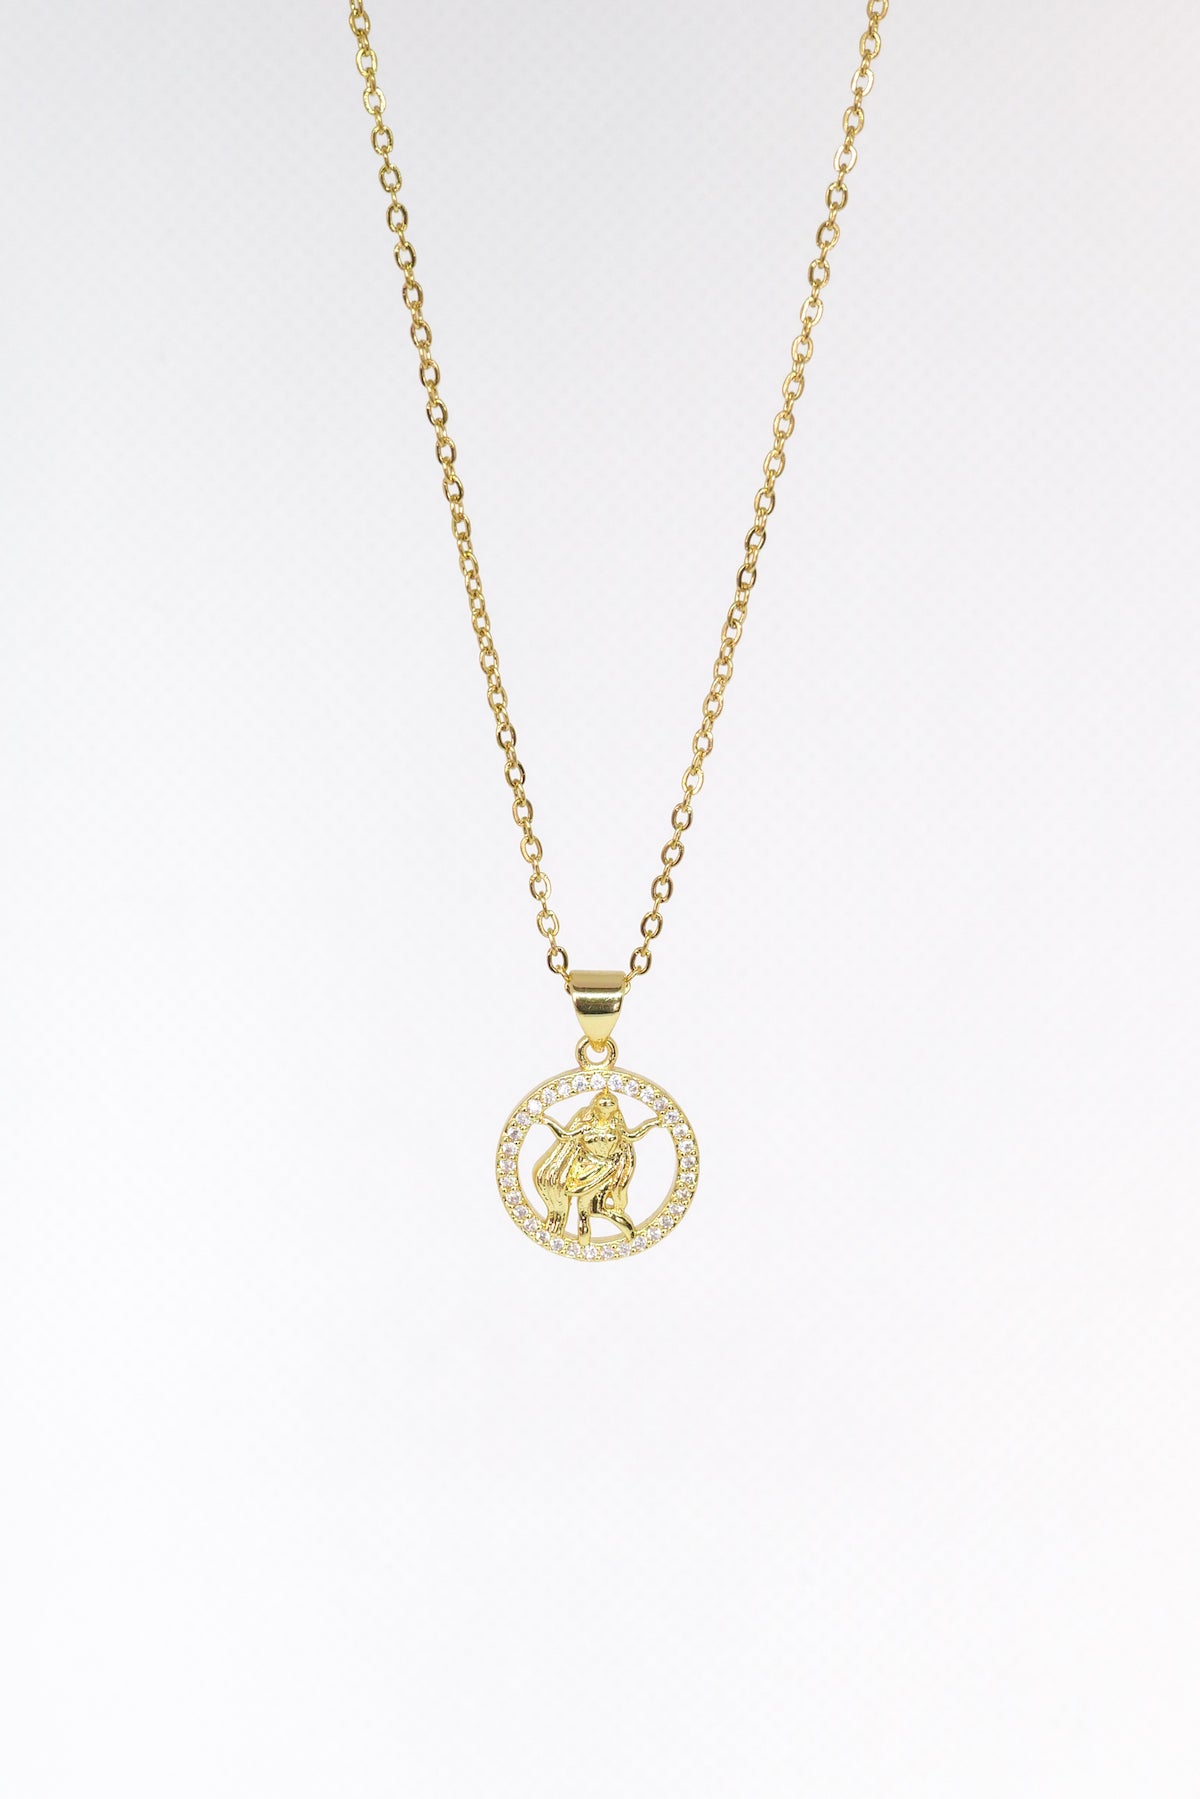 Virgo zodiac necklace